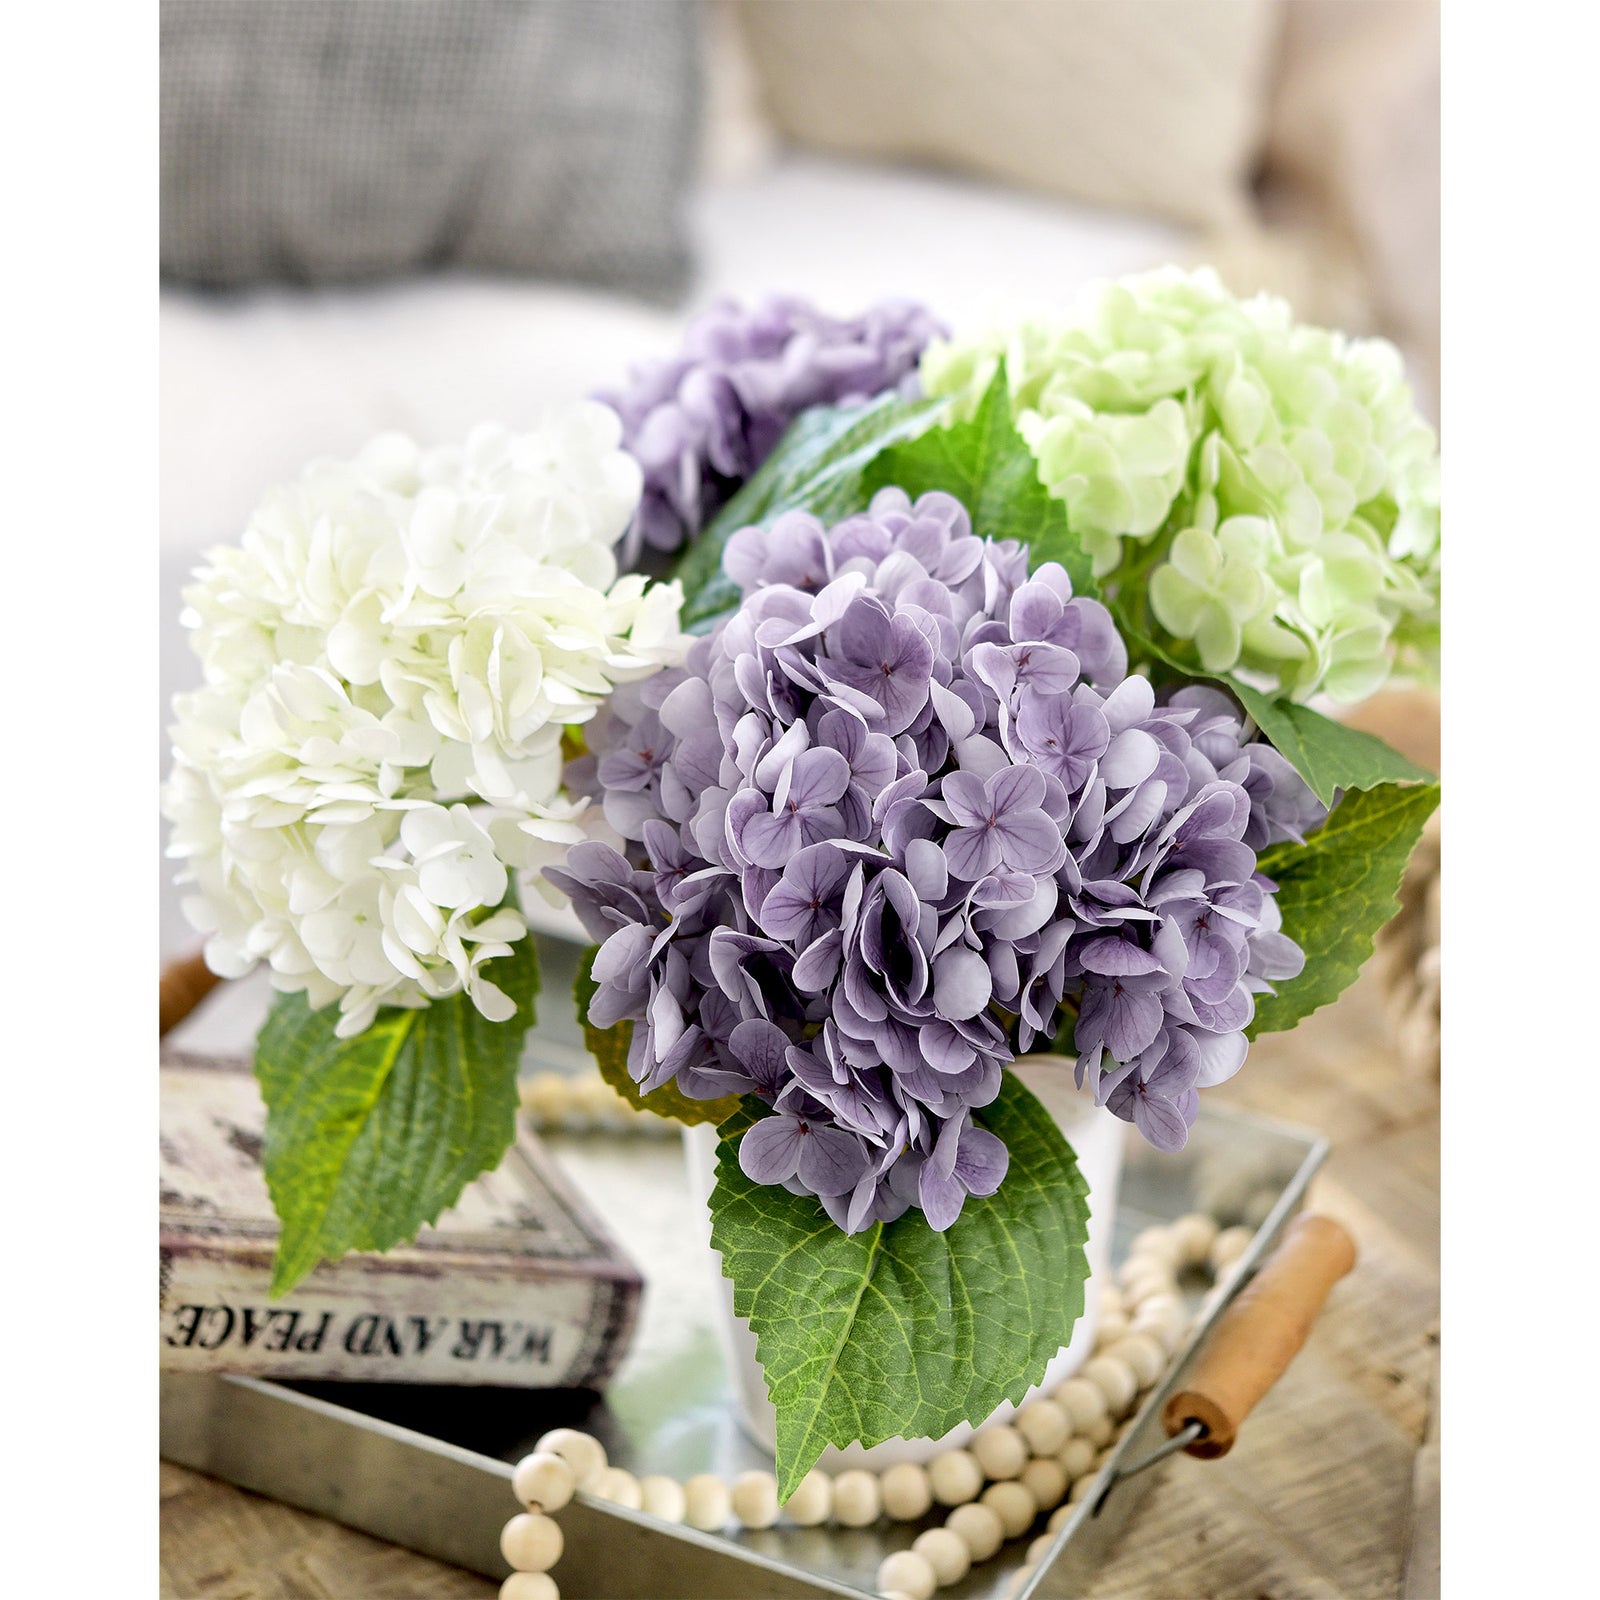 2 Stems Pale Purple Real Touch Petals and Leaves Artificial Hydrangea Flowers Long Stem Floral Arrangement | for Wedding Bridal Party Home Décor DIY Floral Decoration